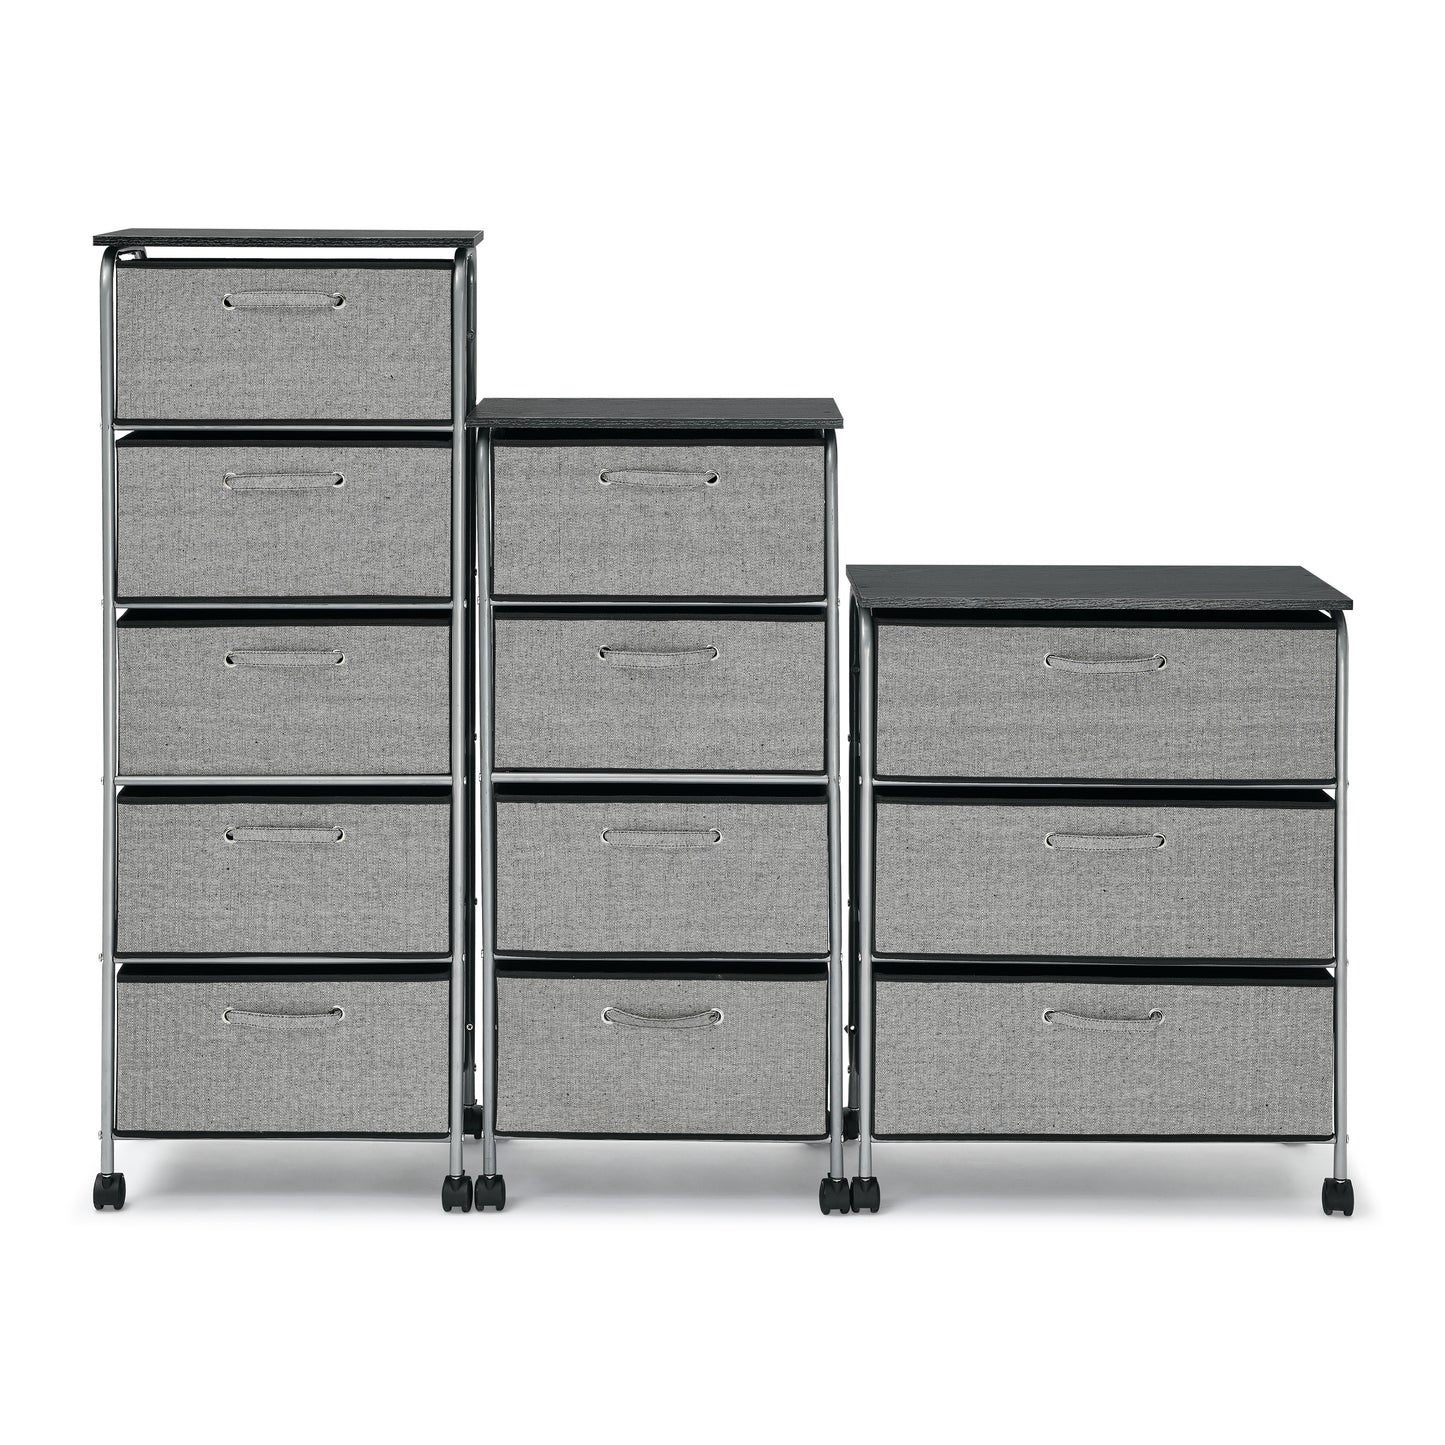 3 Drawers Fabric Dresser Storage Tower Shelves with MDF Top, Organizer Unit for Bedroom, Closet, Entryway, Hallway, Nursery Room, Office Organization, Grey （23.5“x12”x30“）